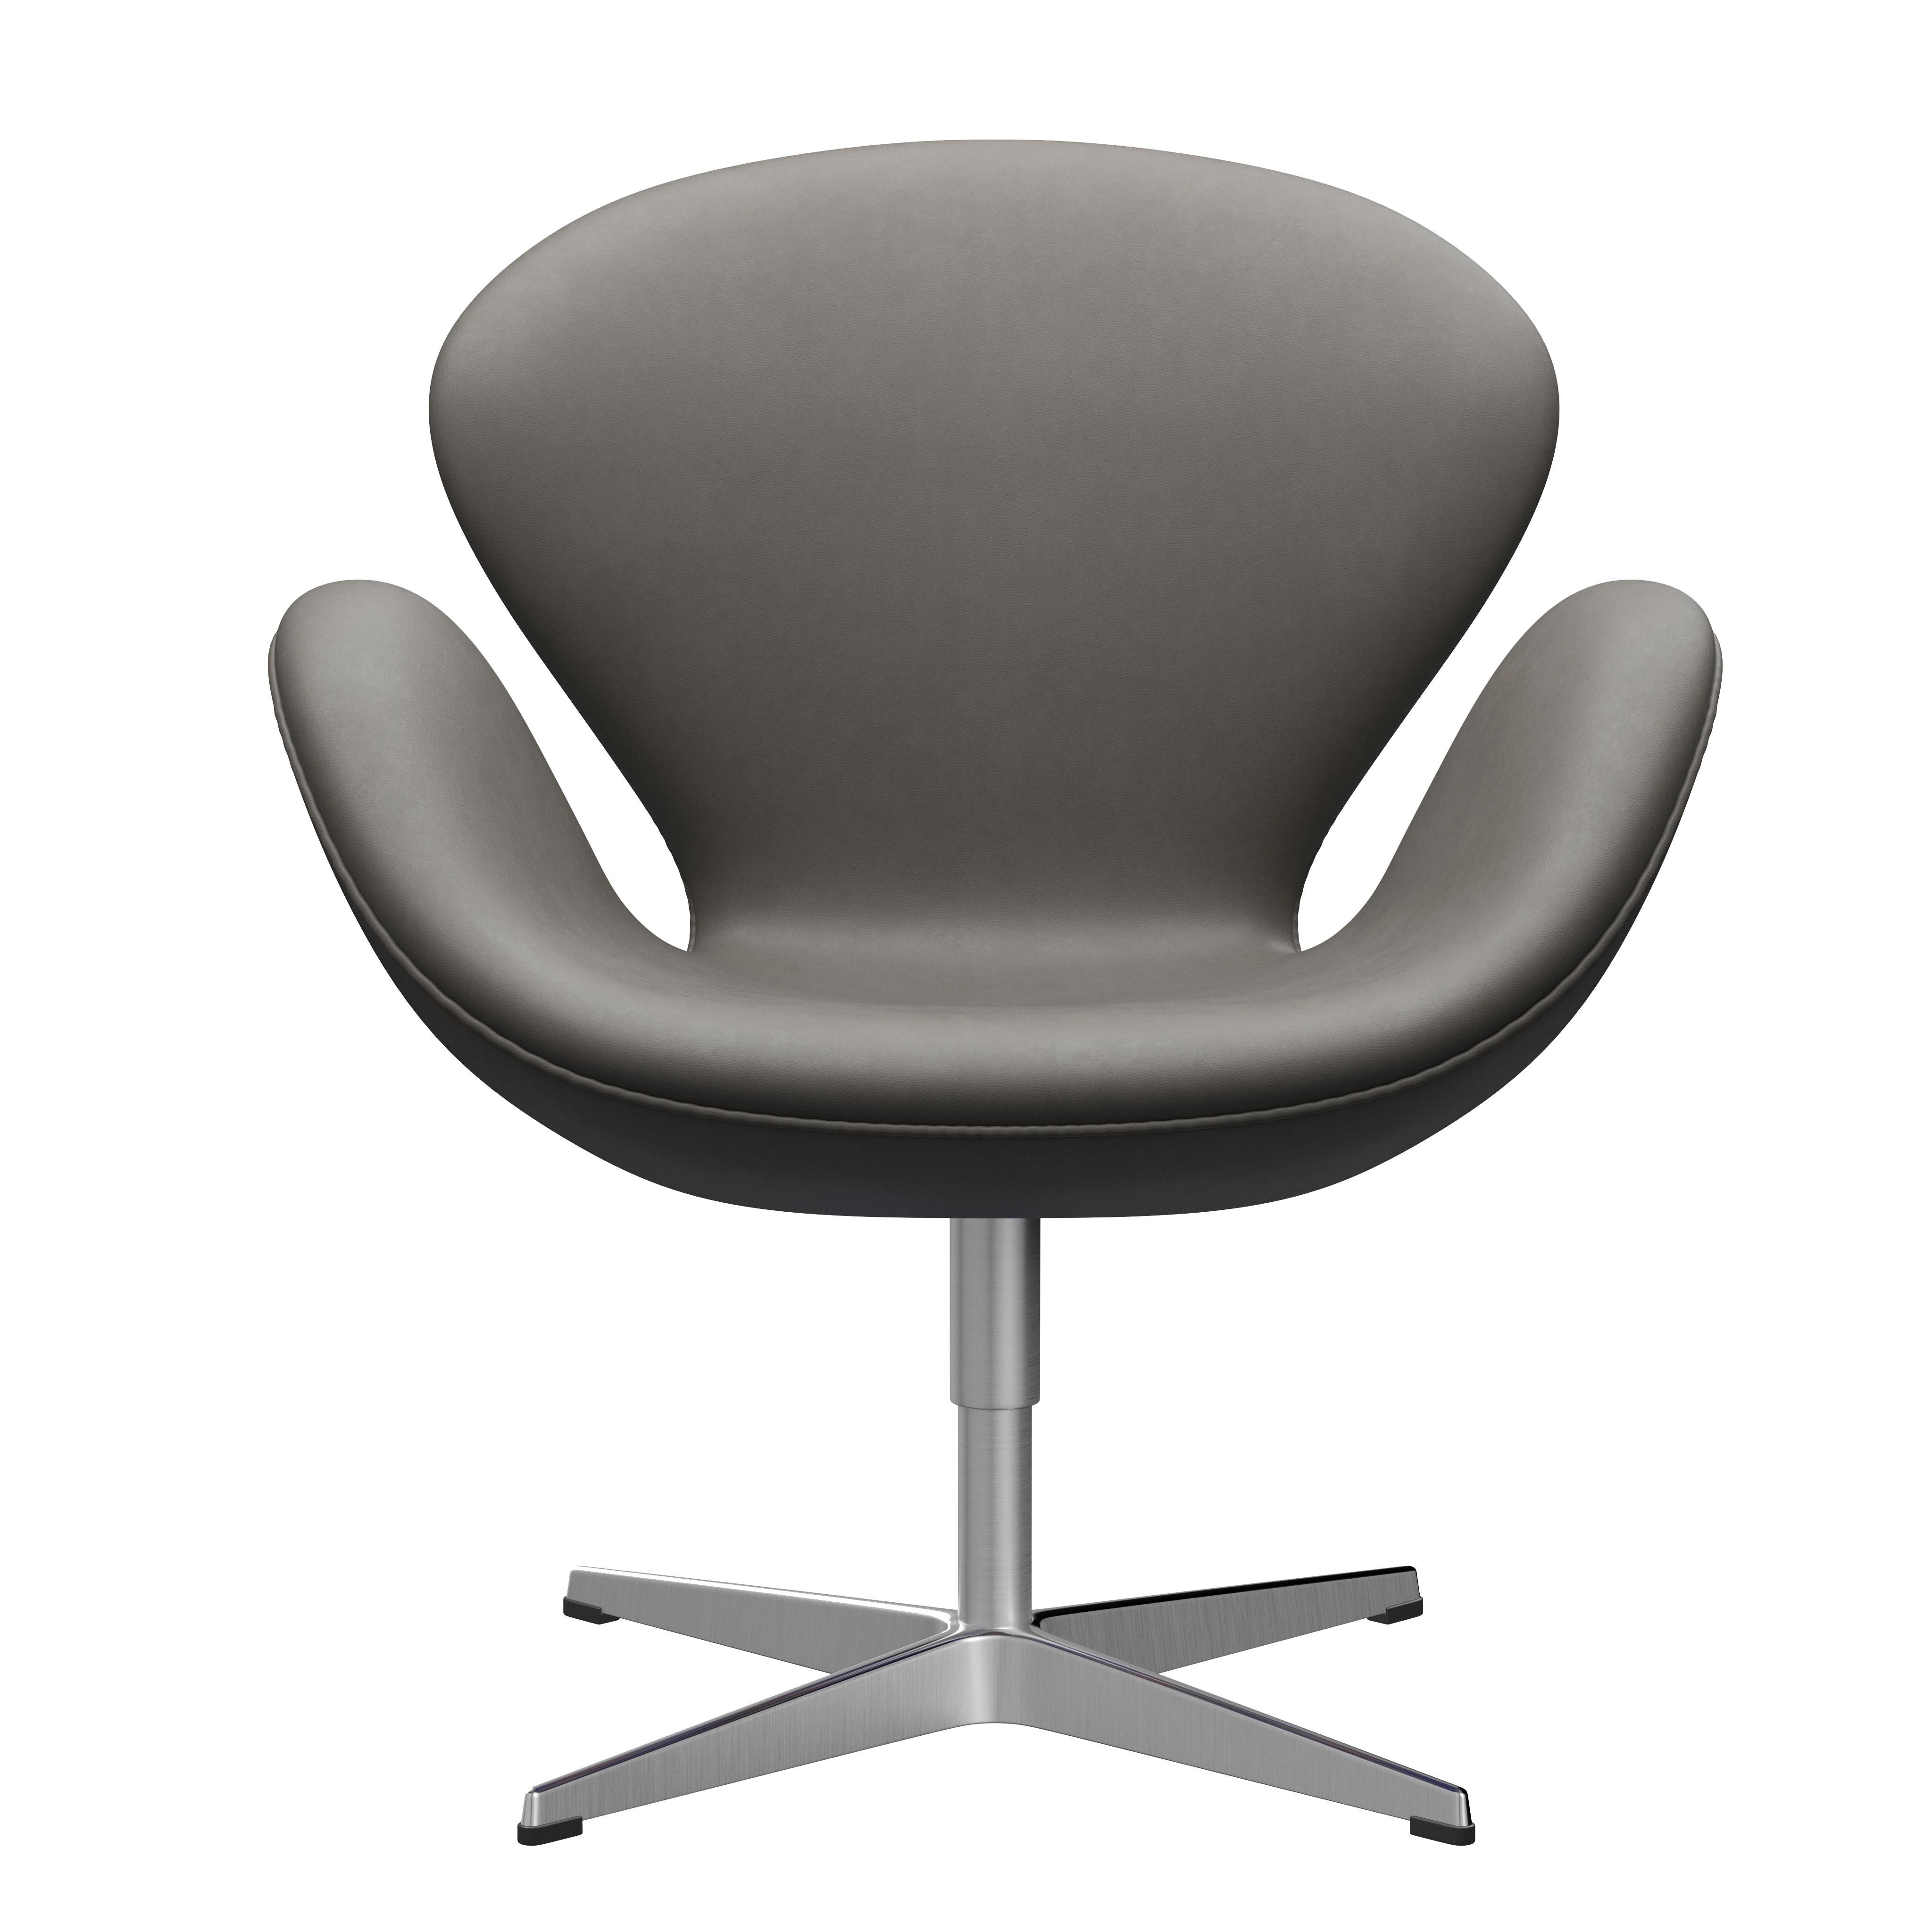 Arne Jacobsen 'Swan' Chair for Fritz Hansen in Leather Upholstery (Cat. 3) For Sale 8